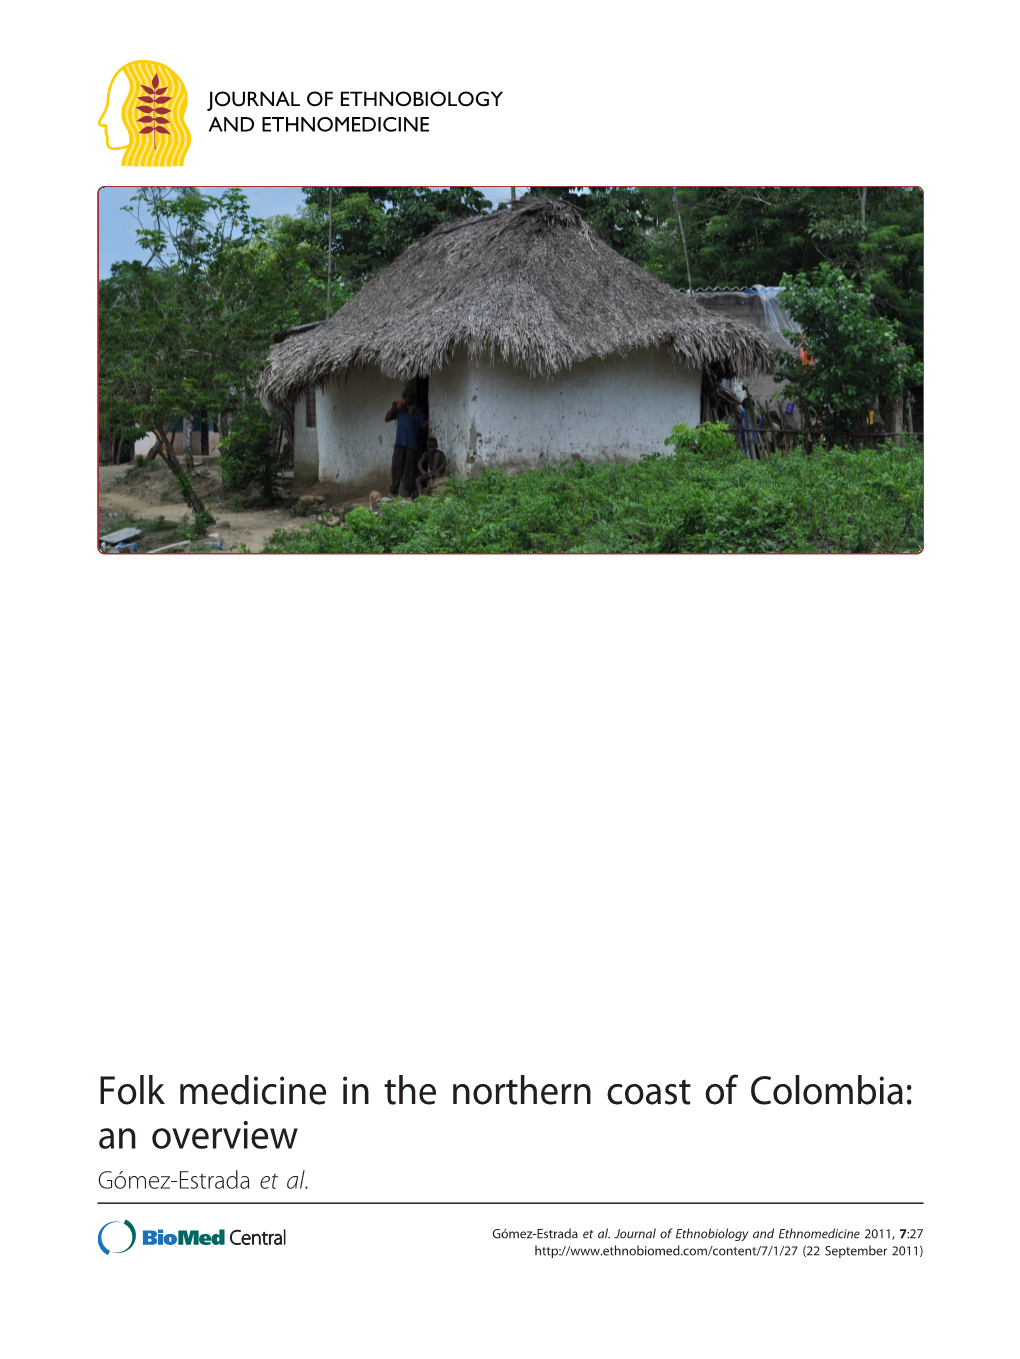 Folk Medicine in the Northern Coast of Colombia: an Overview Gómez-Estrada Et Al